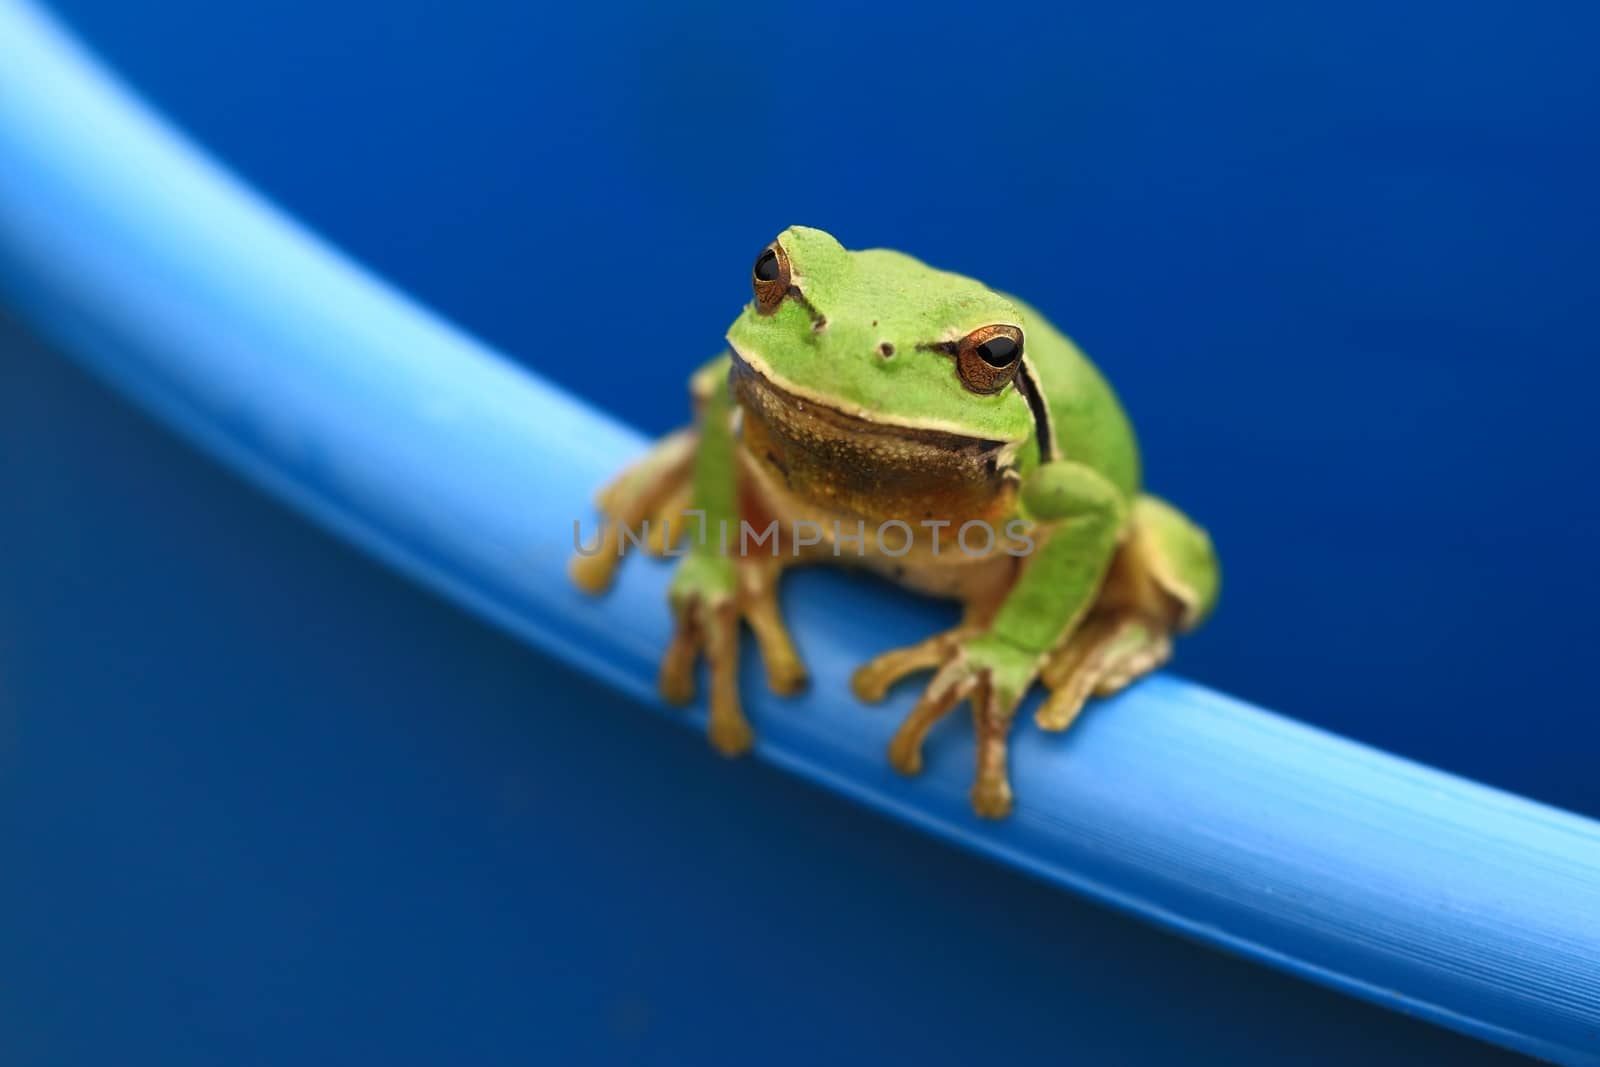 Green tree frog peeking out of a bucket